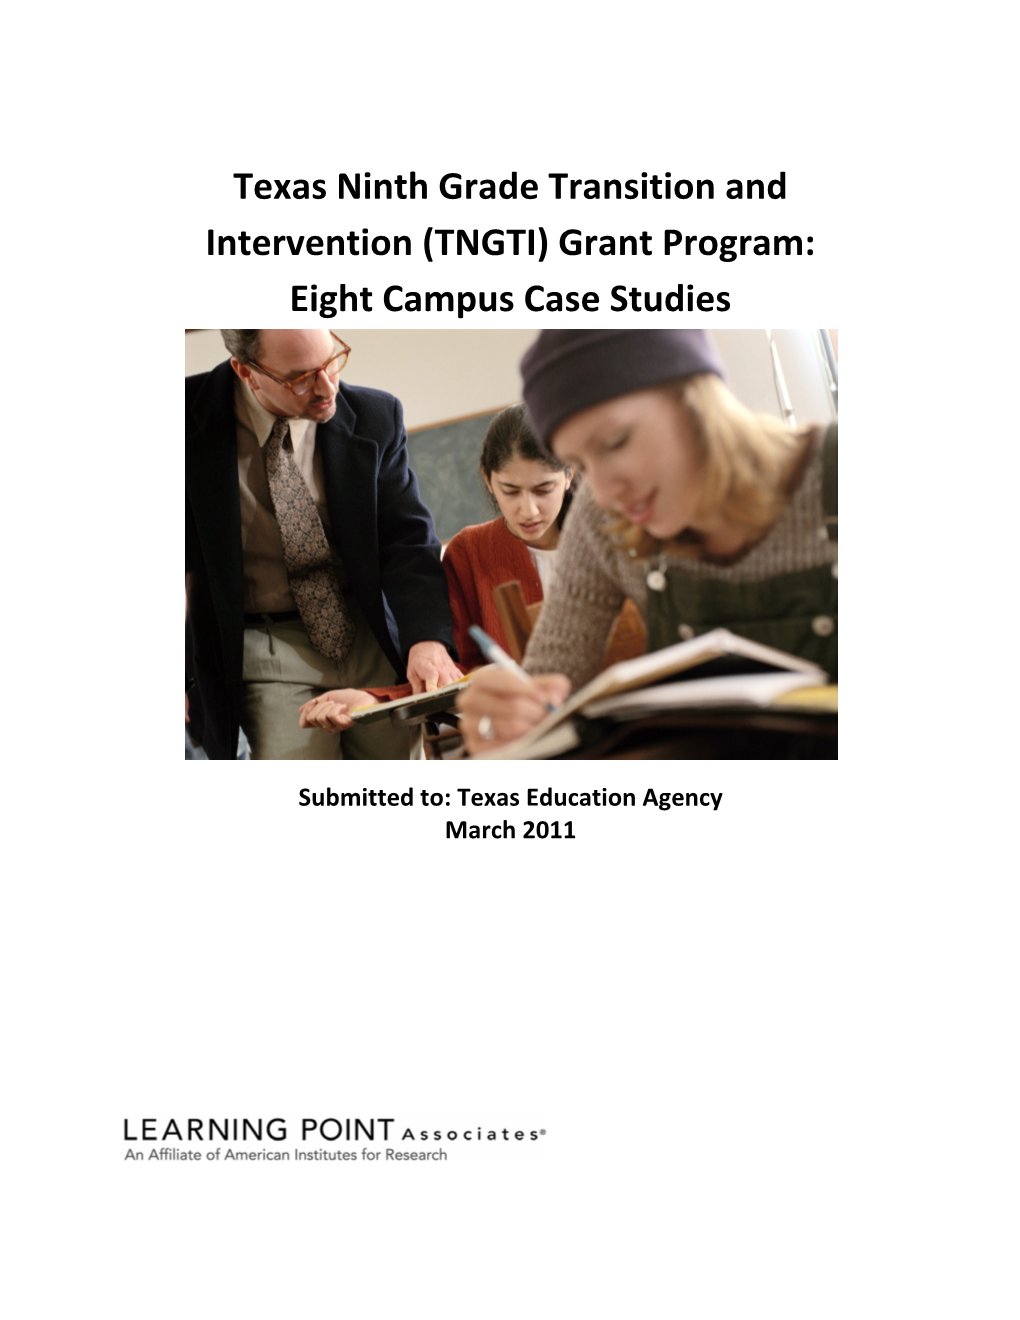 Texas Ninth Grade Transition and Intervention (TNGTI) Grant Program: Eight Campus Case Studies